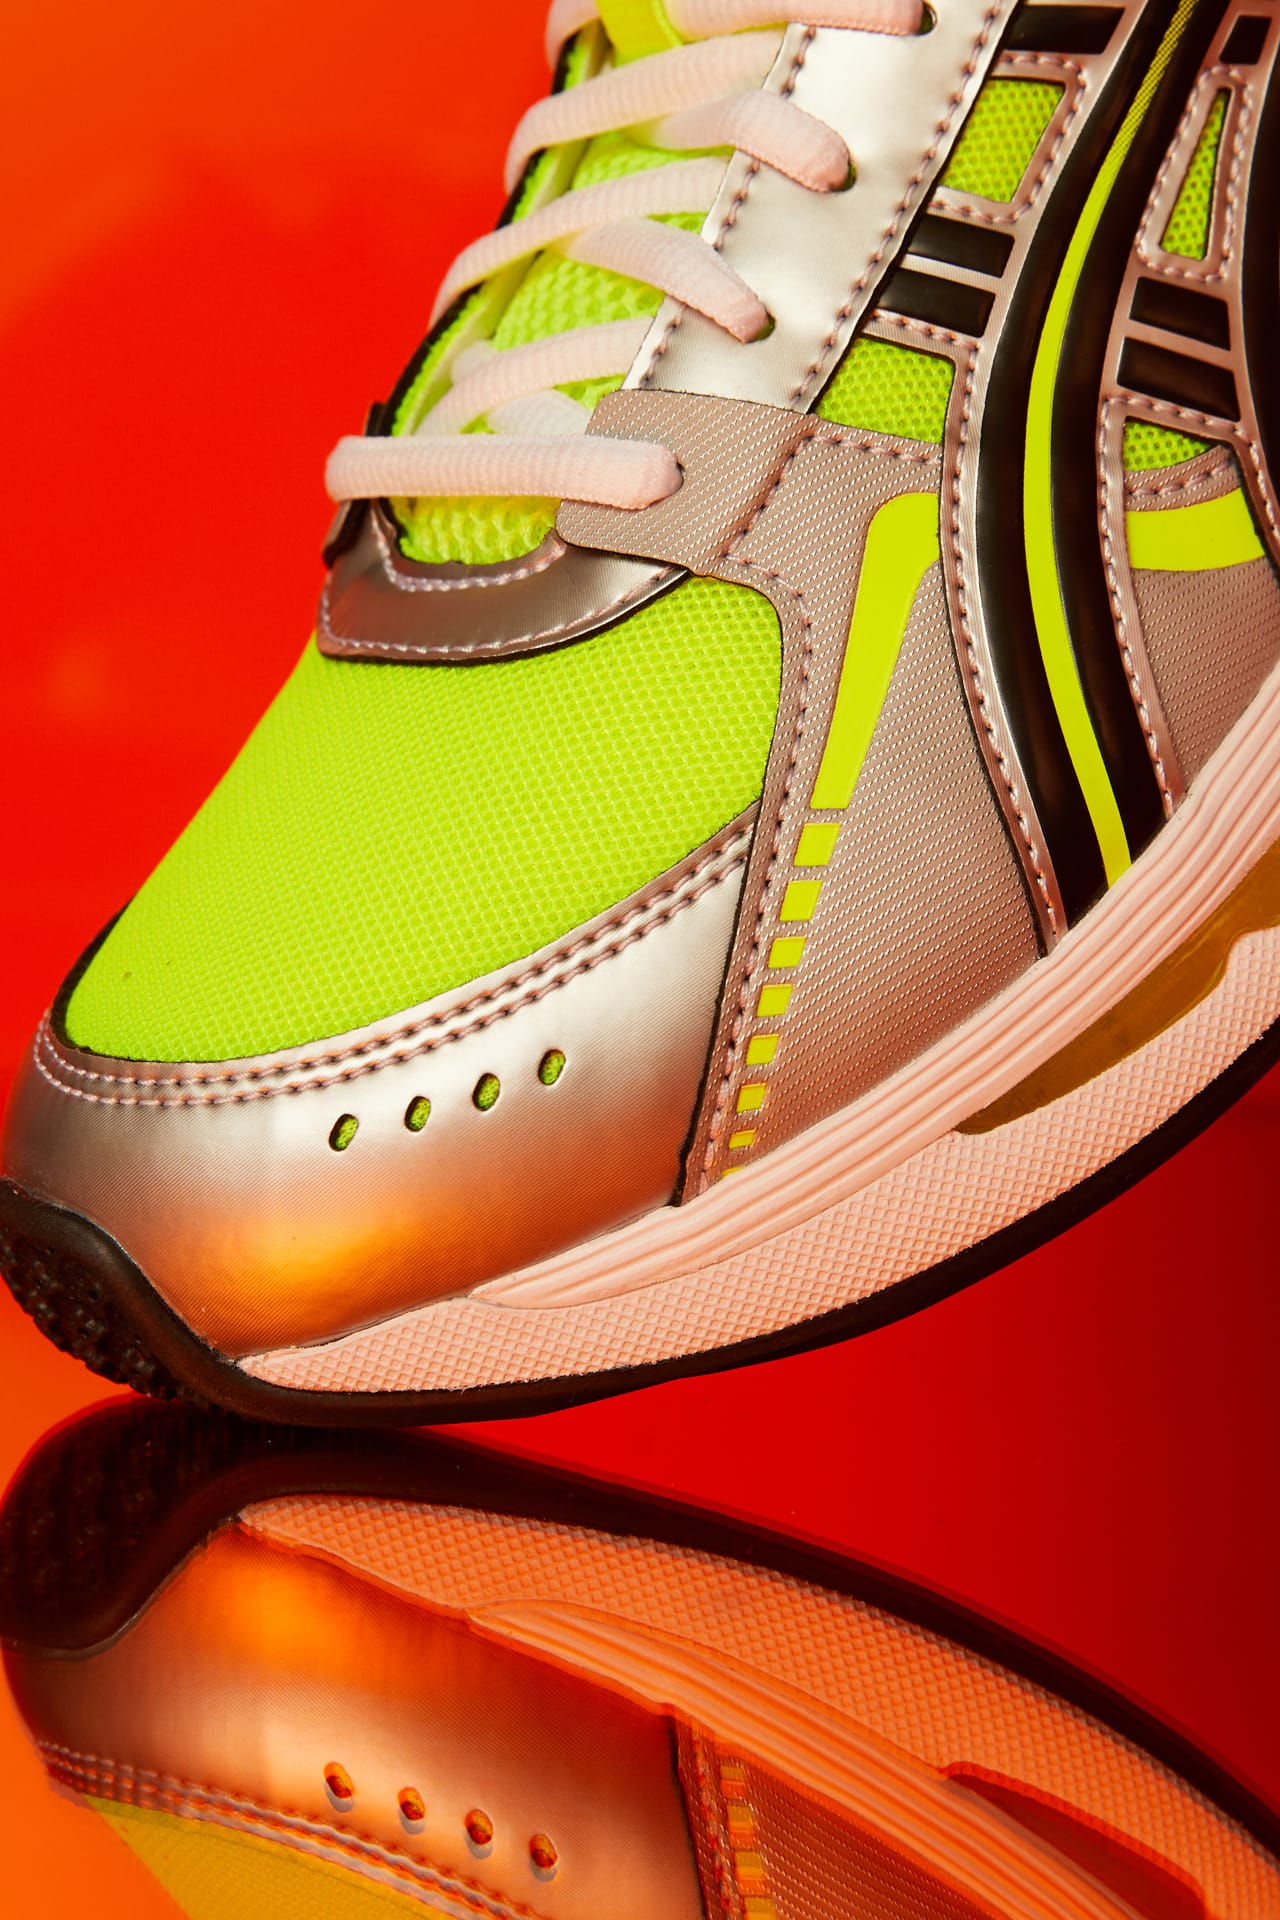 asics green running shoes